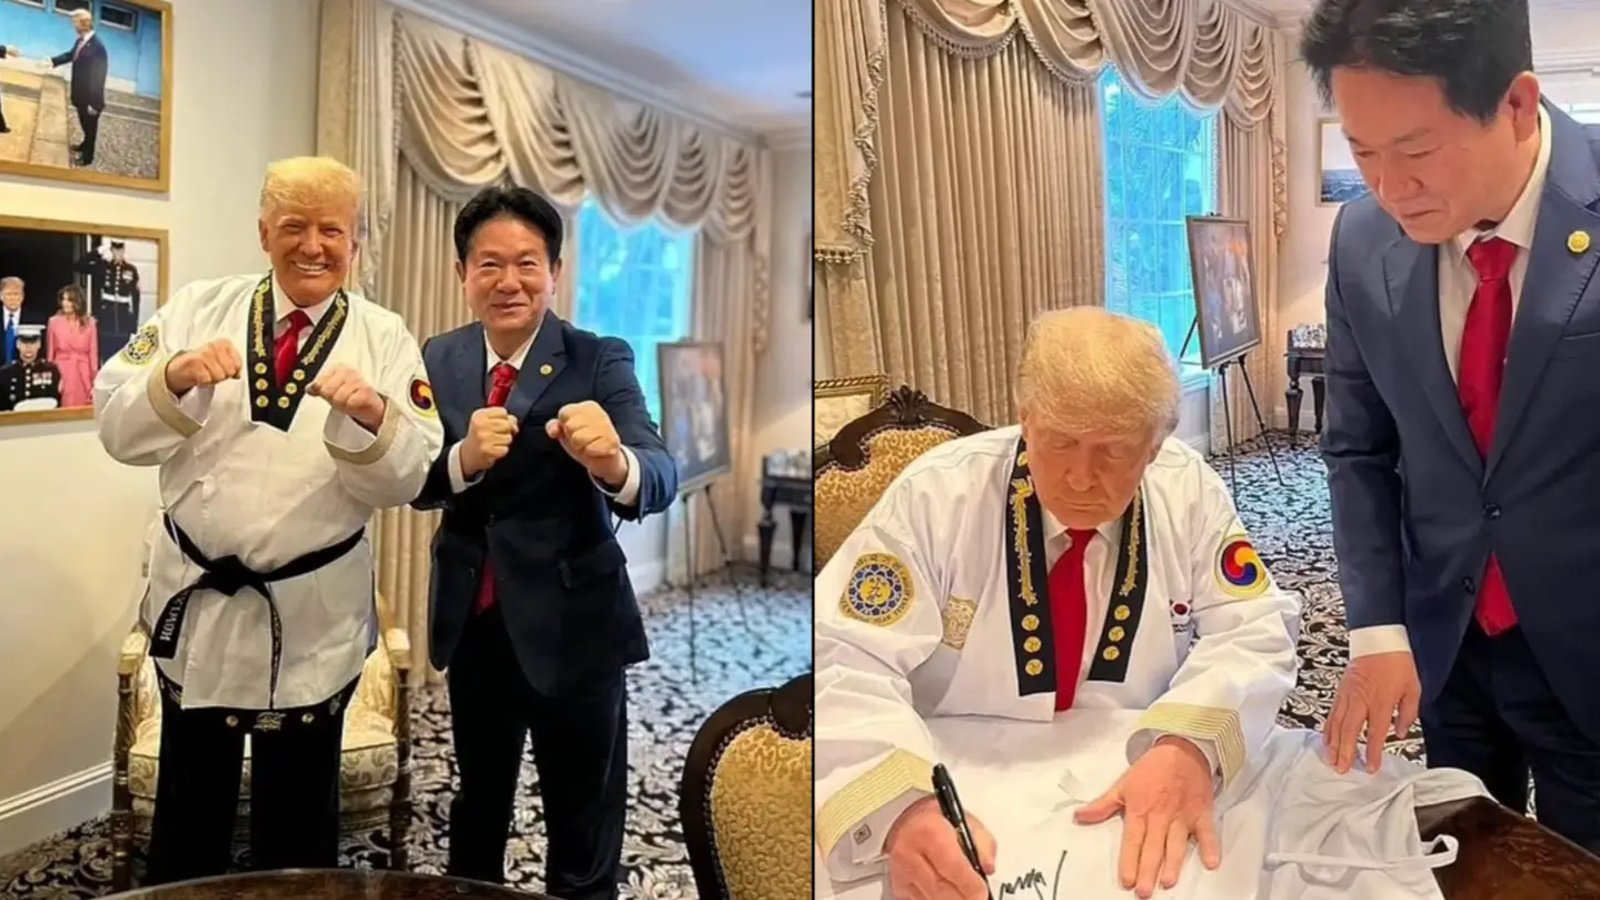 Donald Trump est maintenant ceinture noire en taekwondo.